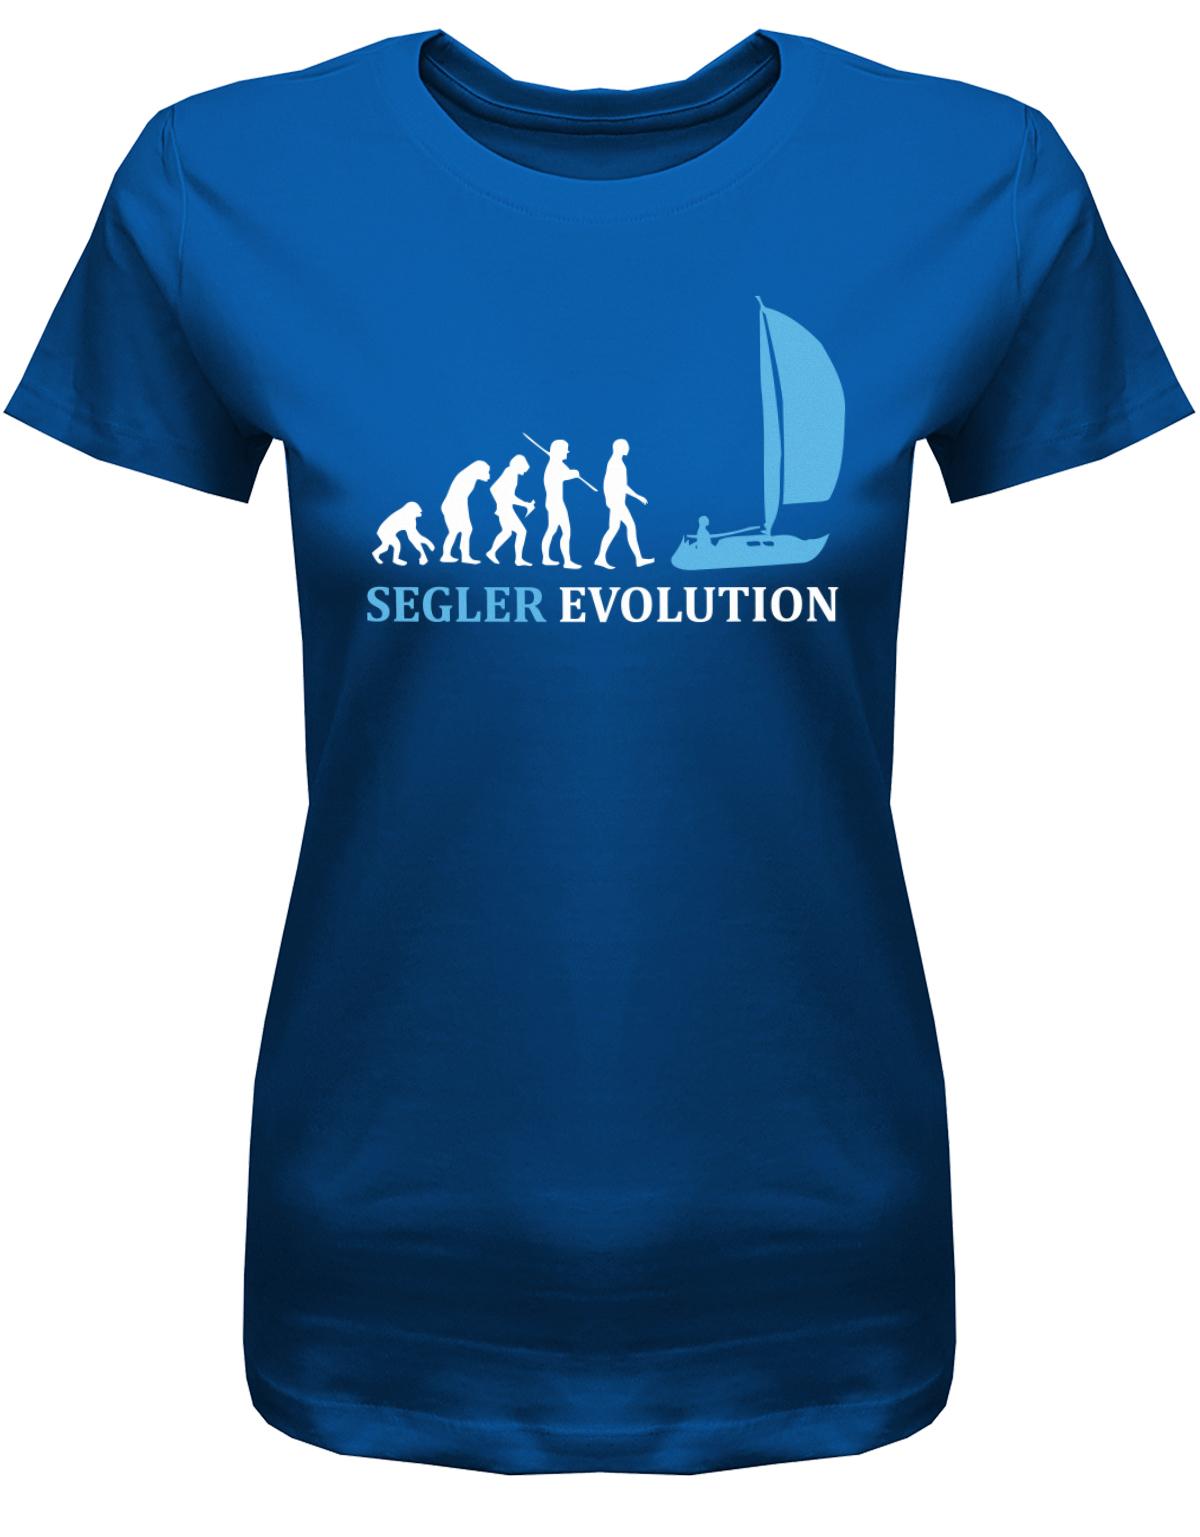 Segler-Evolution-Damen-Shirt-Royalblau